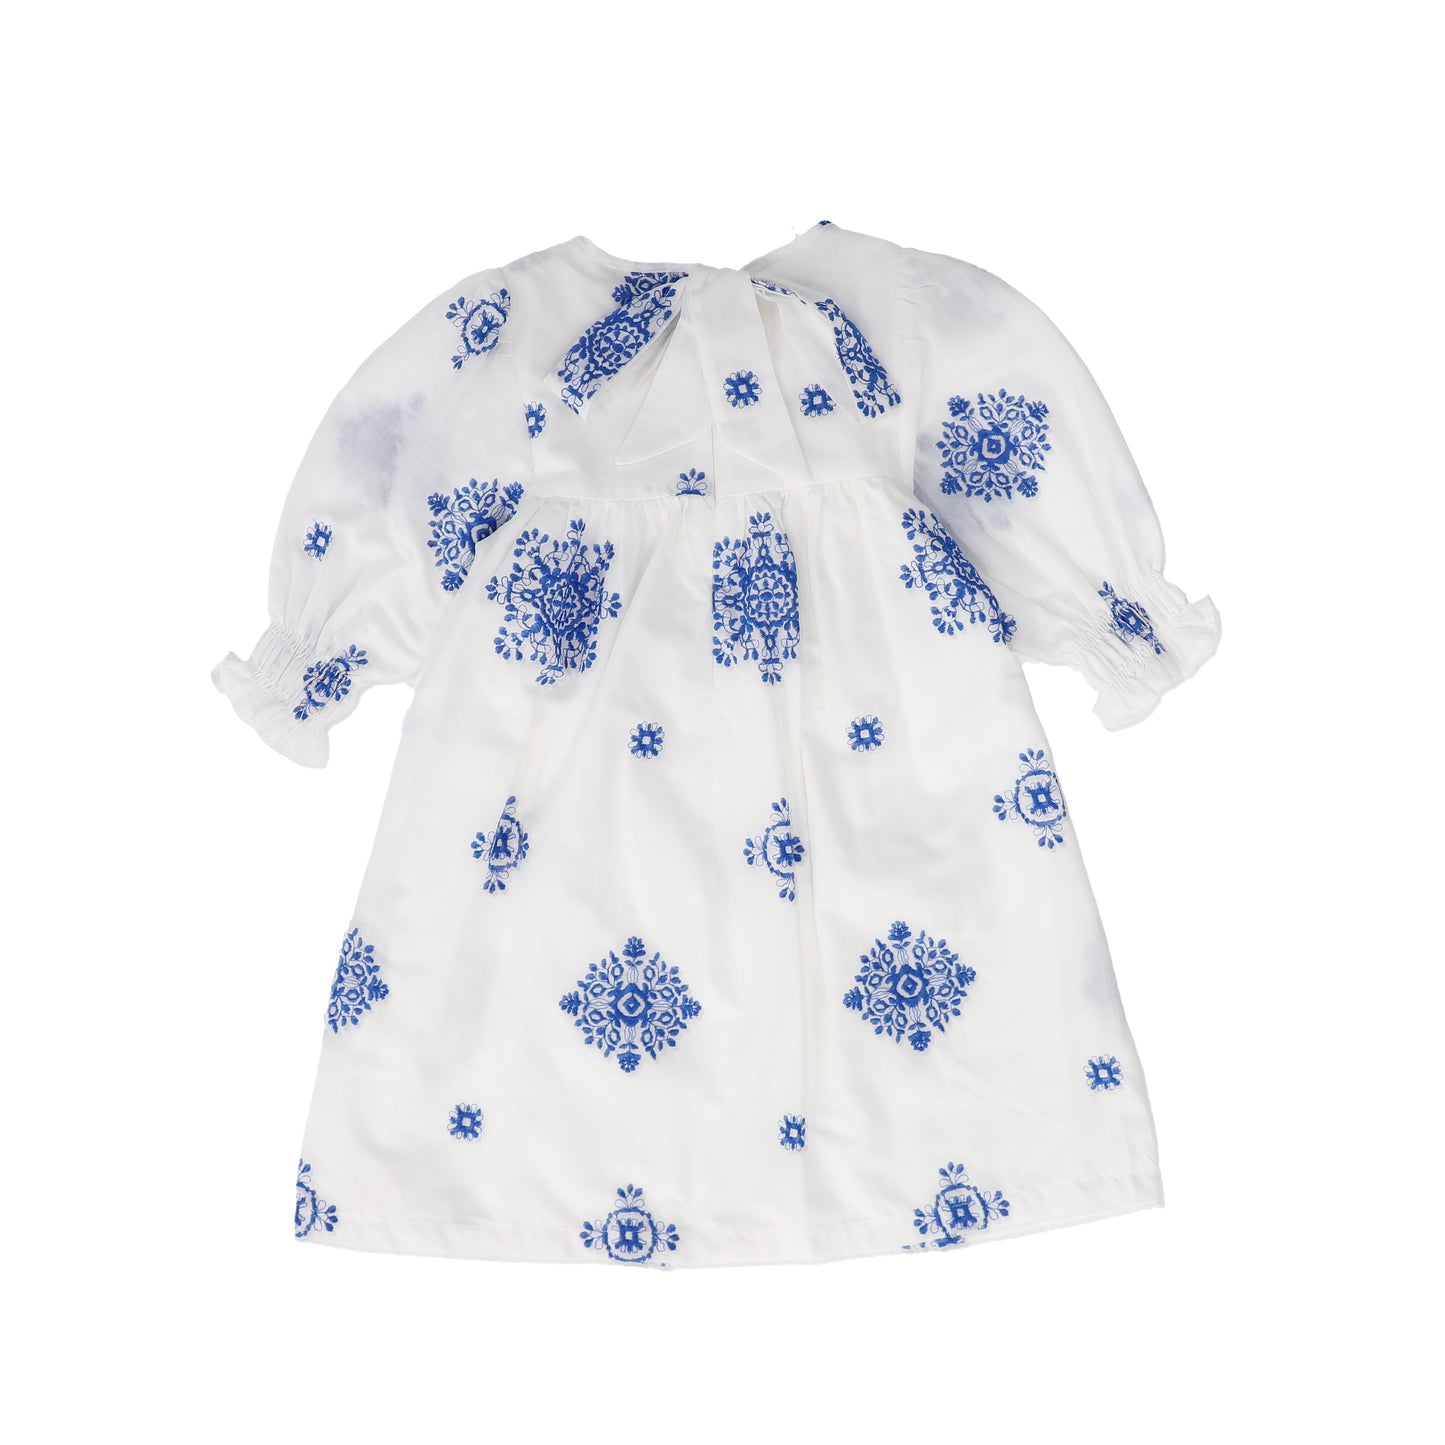 PICCOLA LUDO WHITE/BLUE EMBROIDERED DRESS [FINAL SALE]